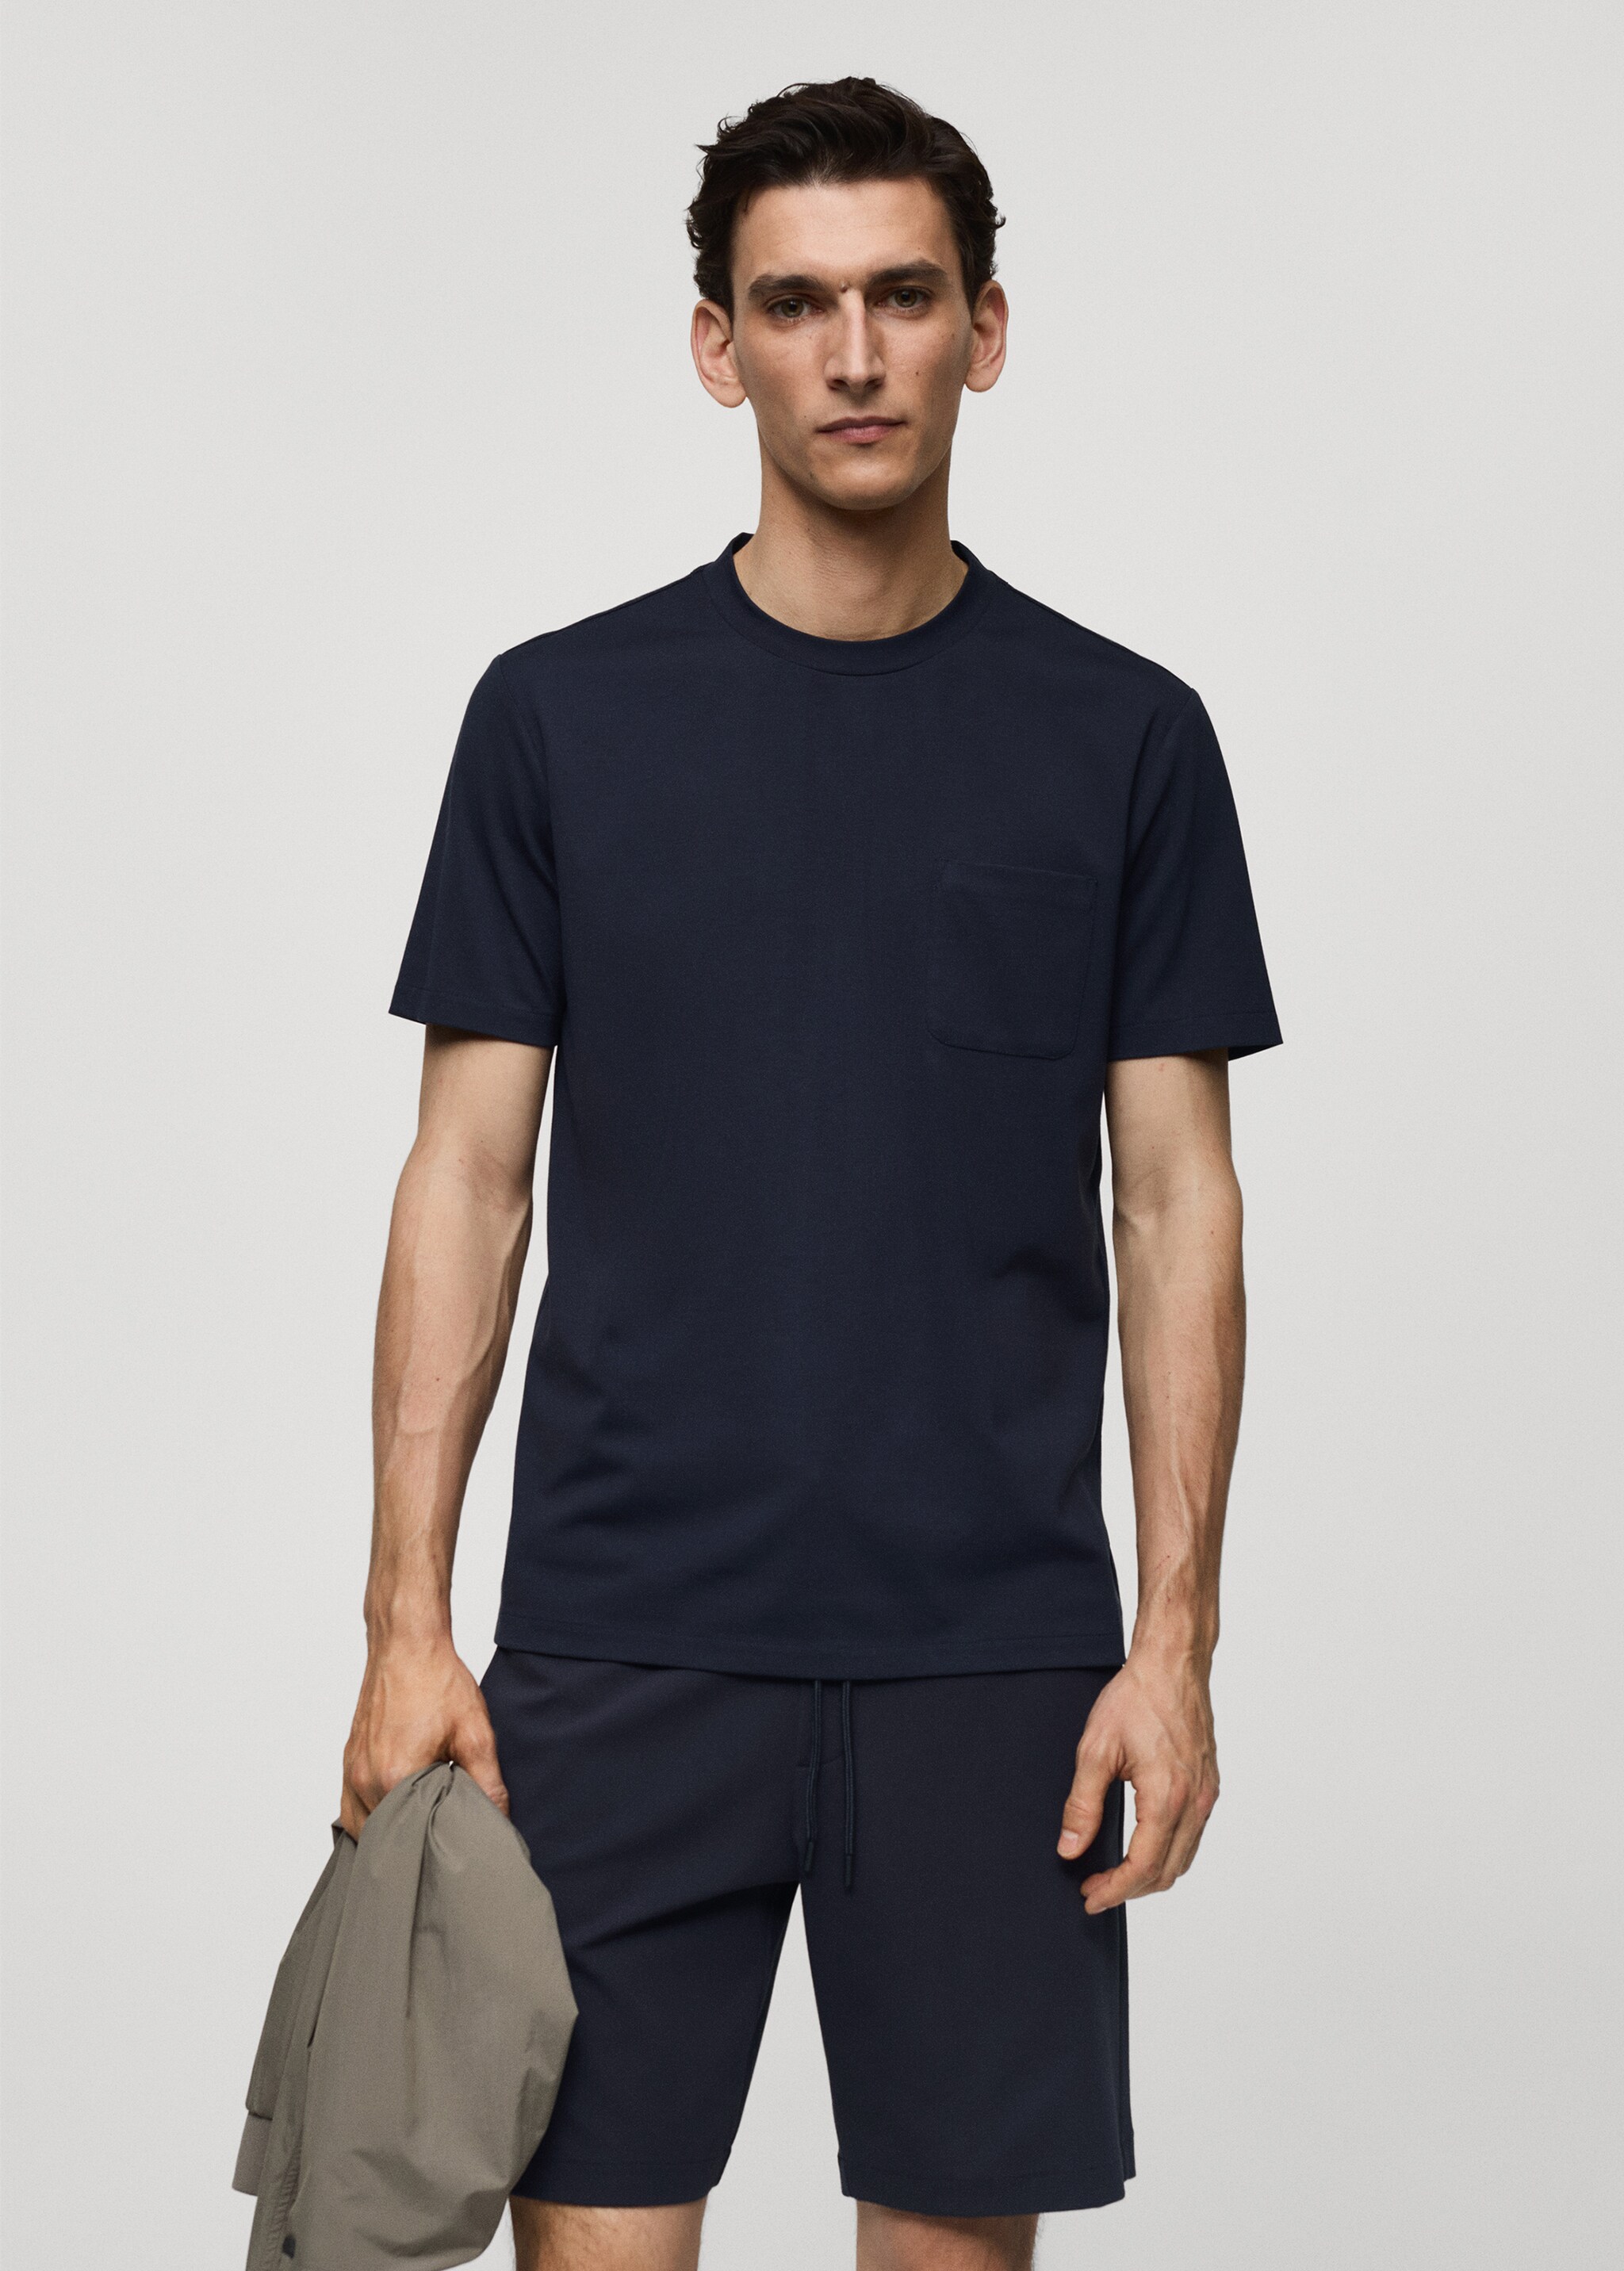 Slim fit t-shirt with pocket - Medium plane